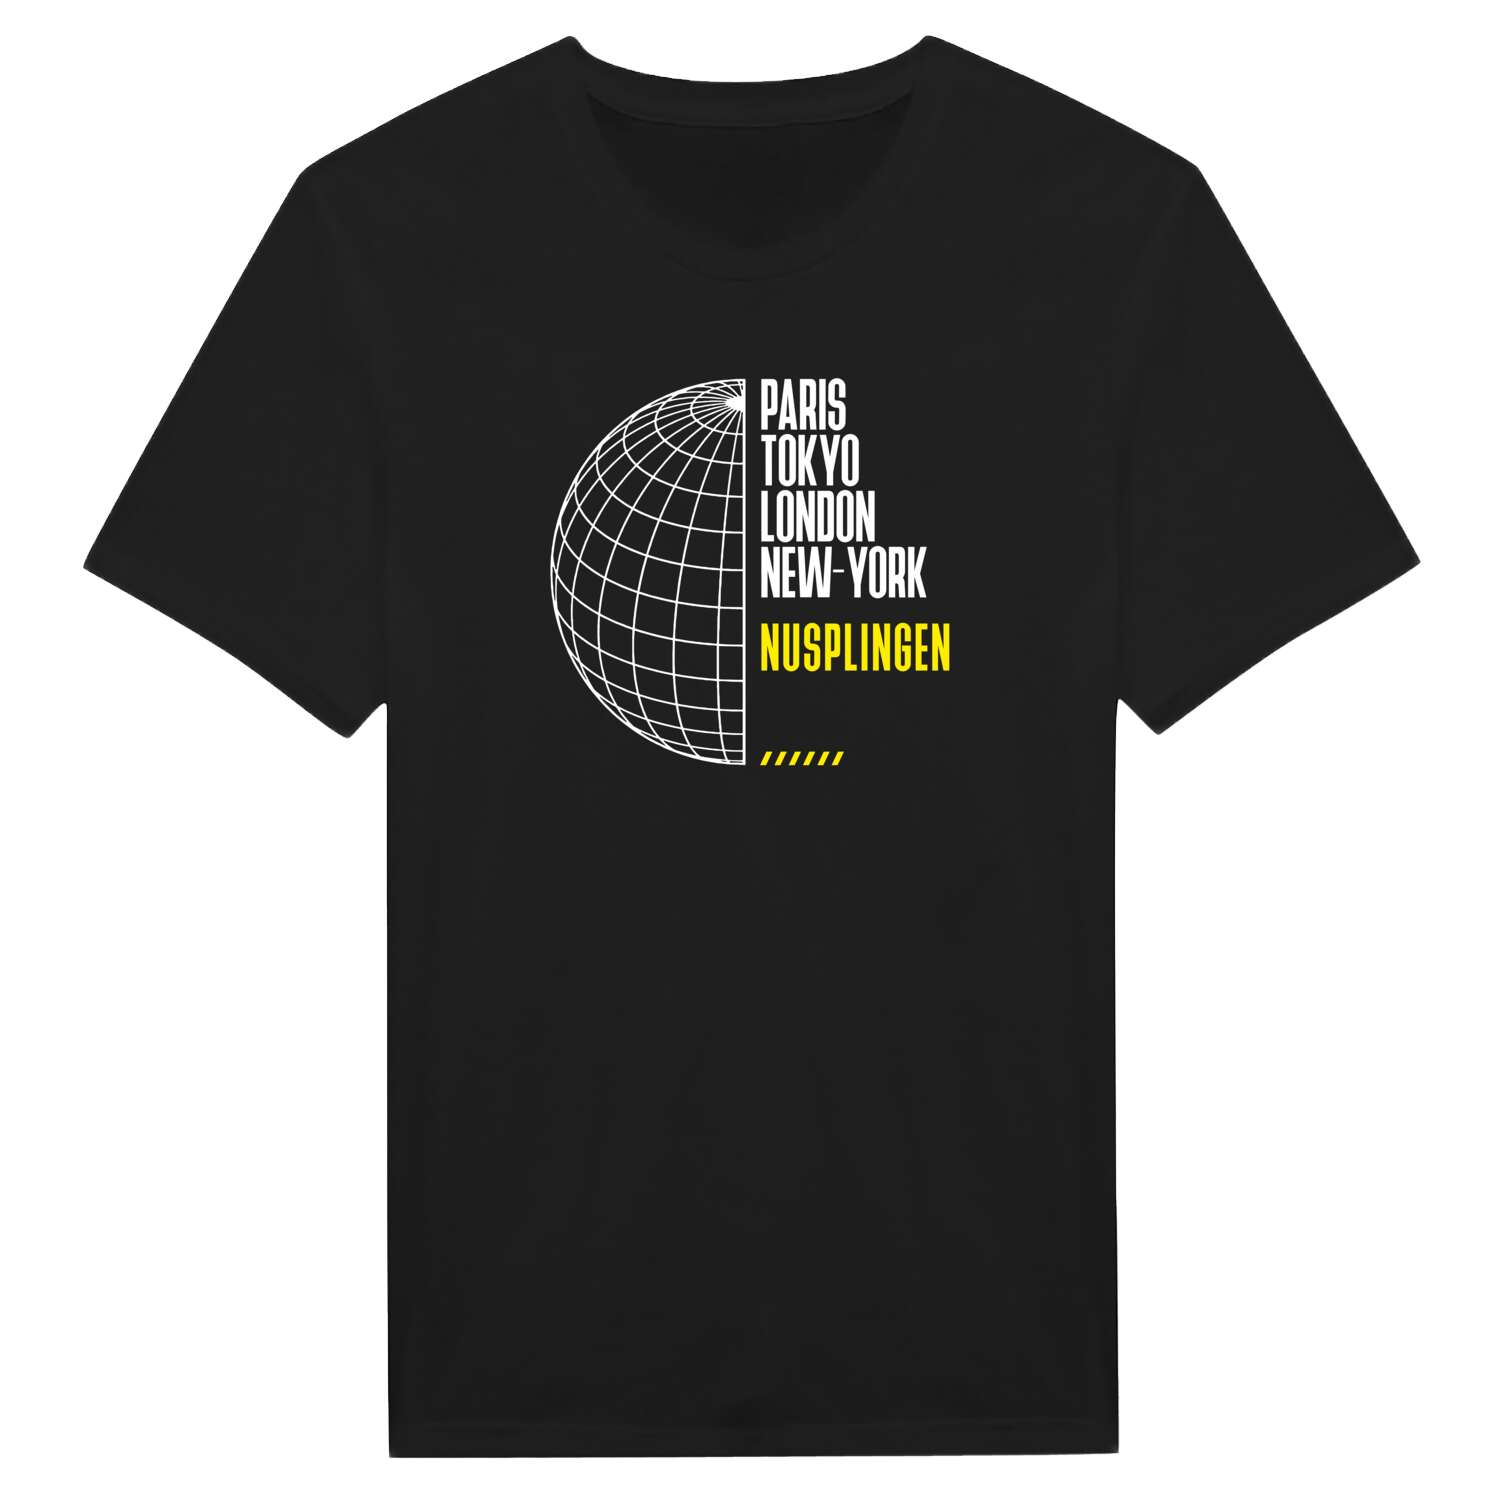 Nusplingen T-Shirt »Paris Tokyo London«